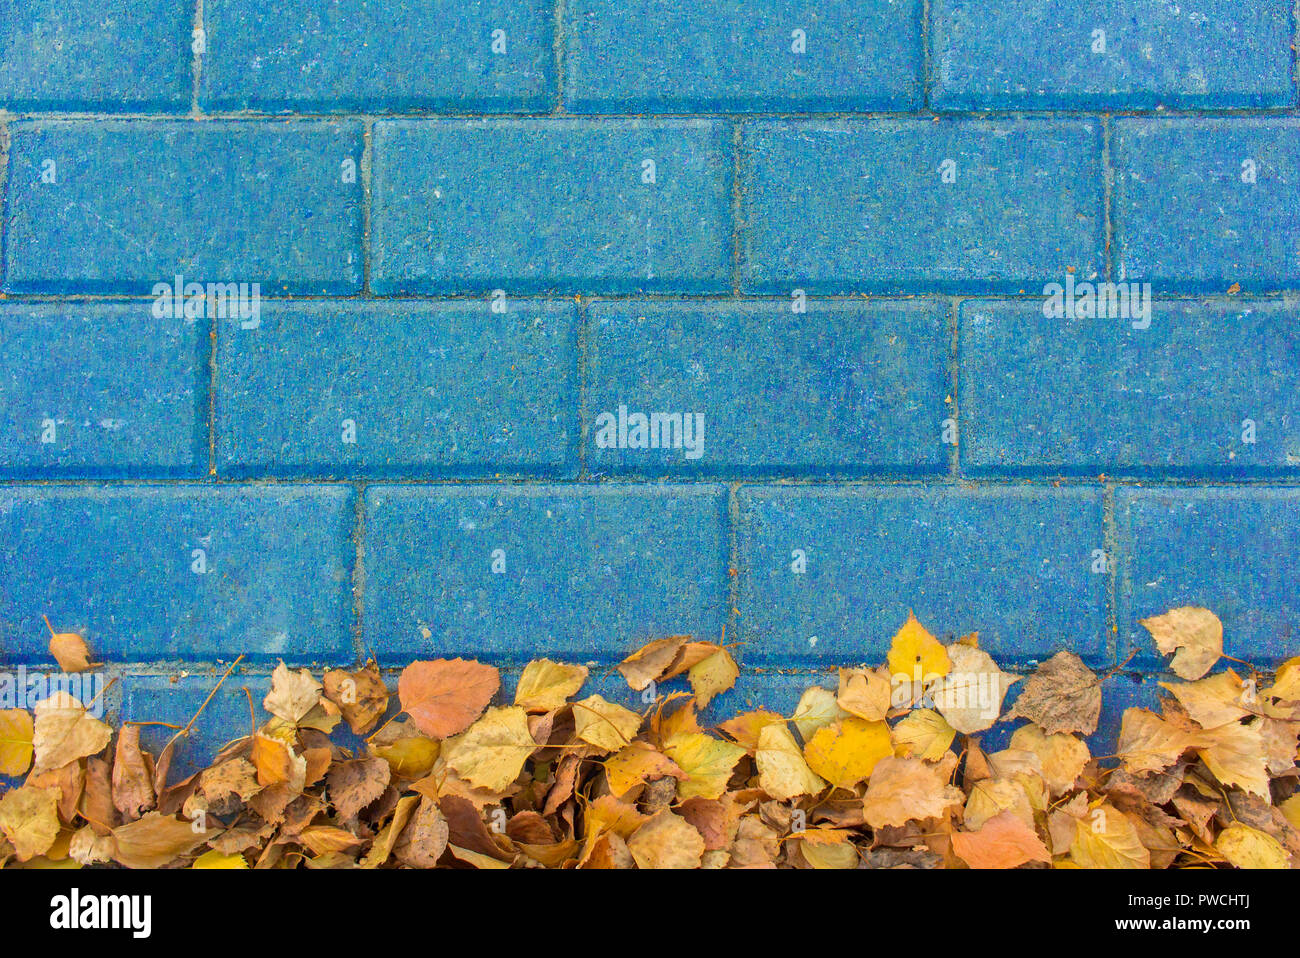 Yellow leaves on blue paving stone bricks Stock Photo